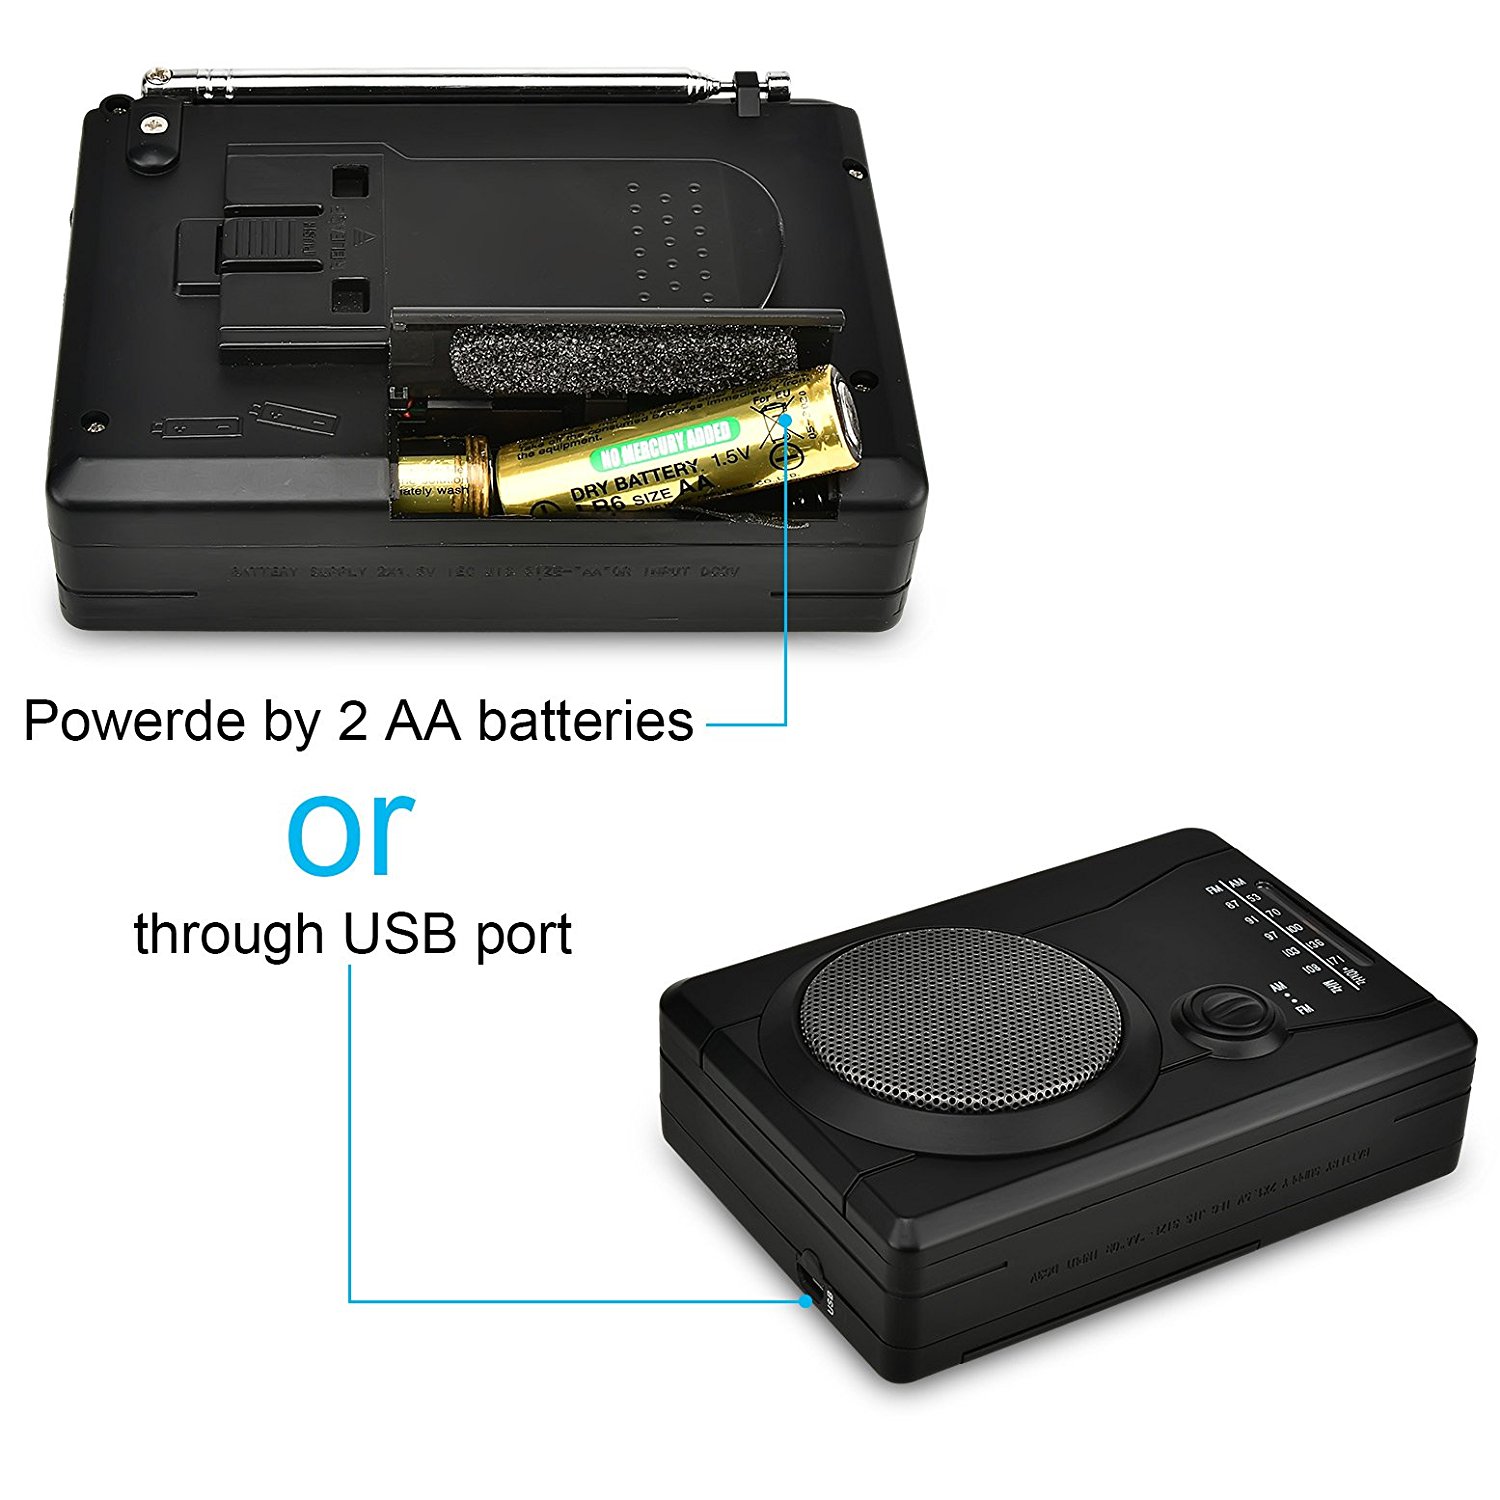 DIGITNOW! Portable Cassette Player/Cassette to MP3 Converter